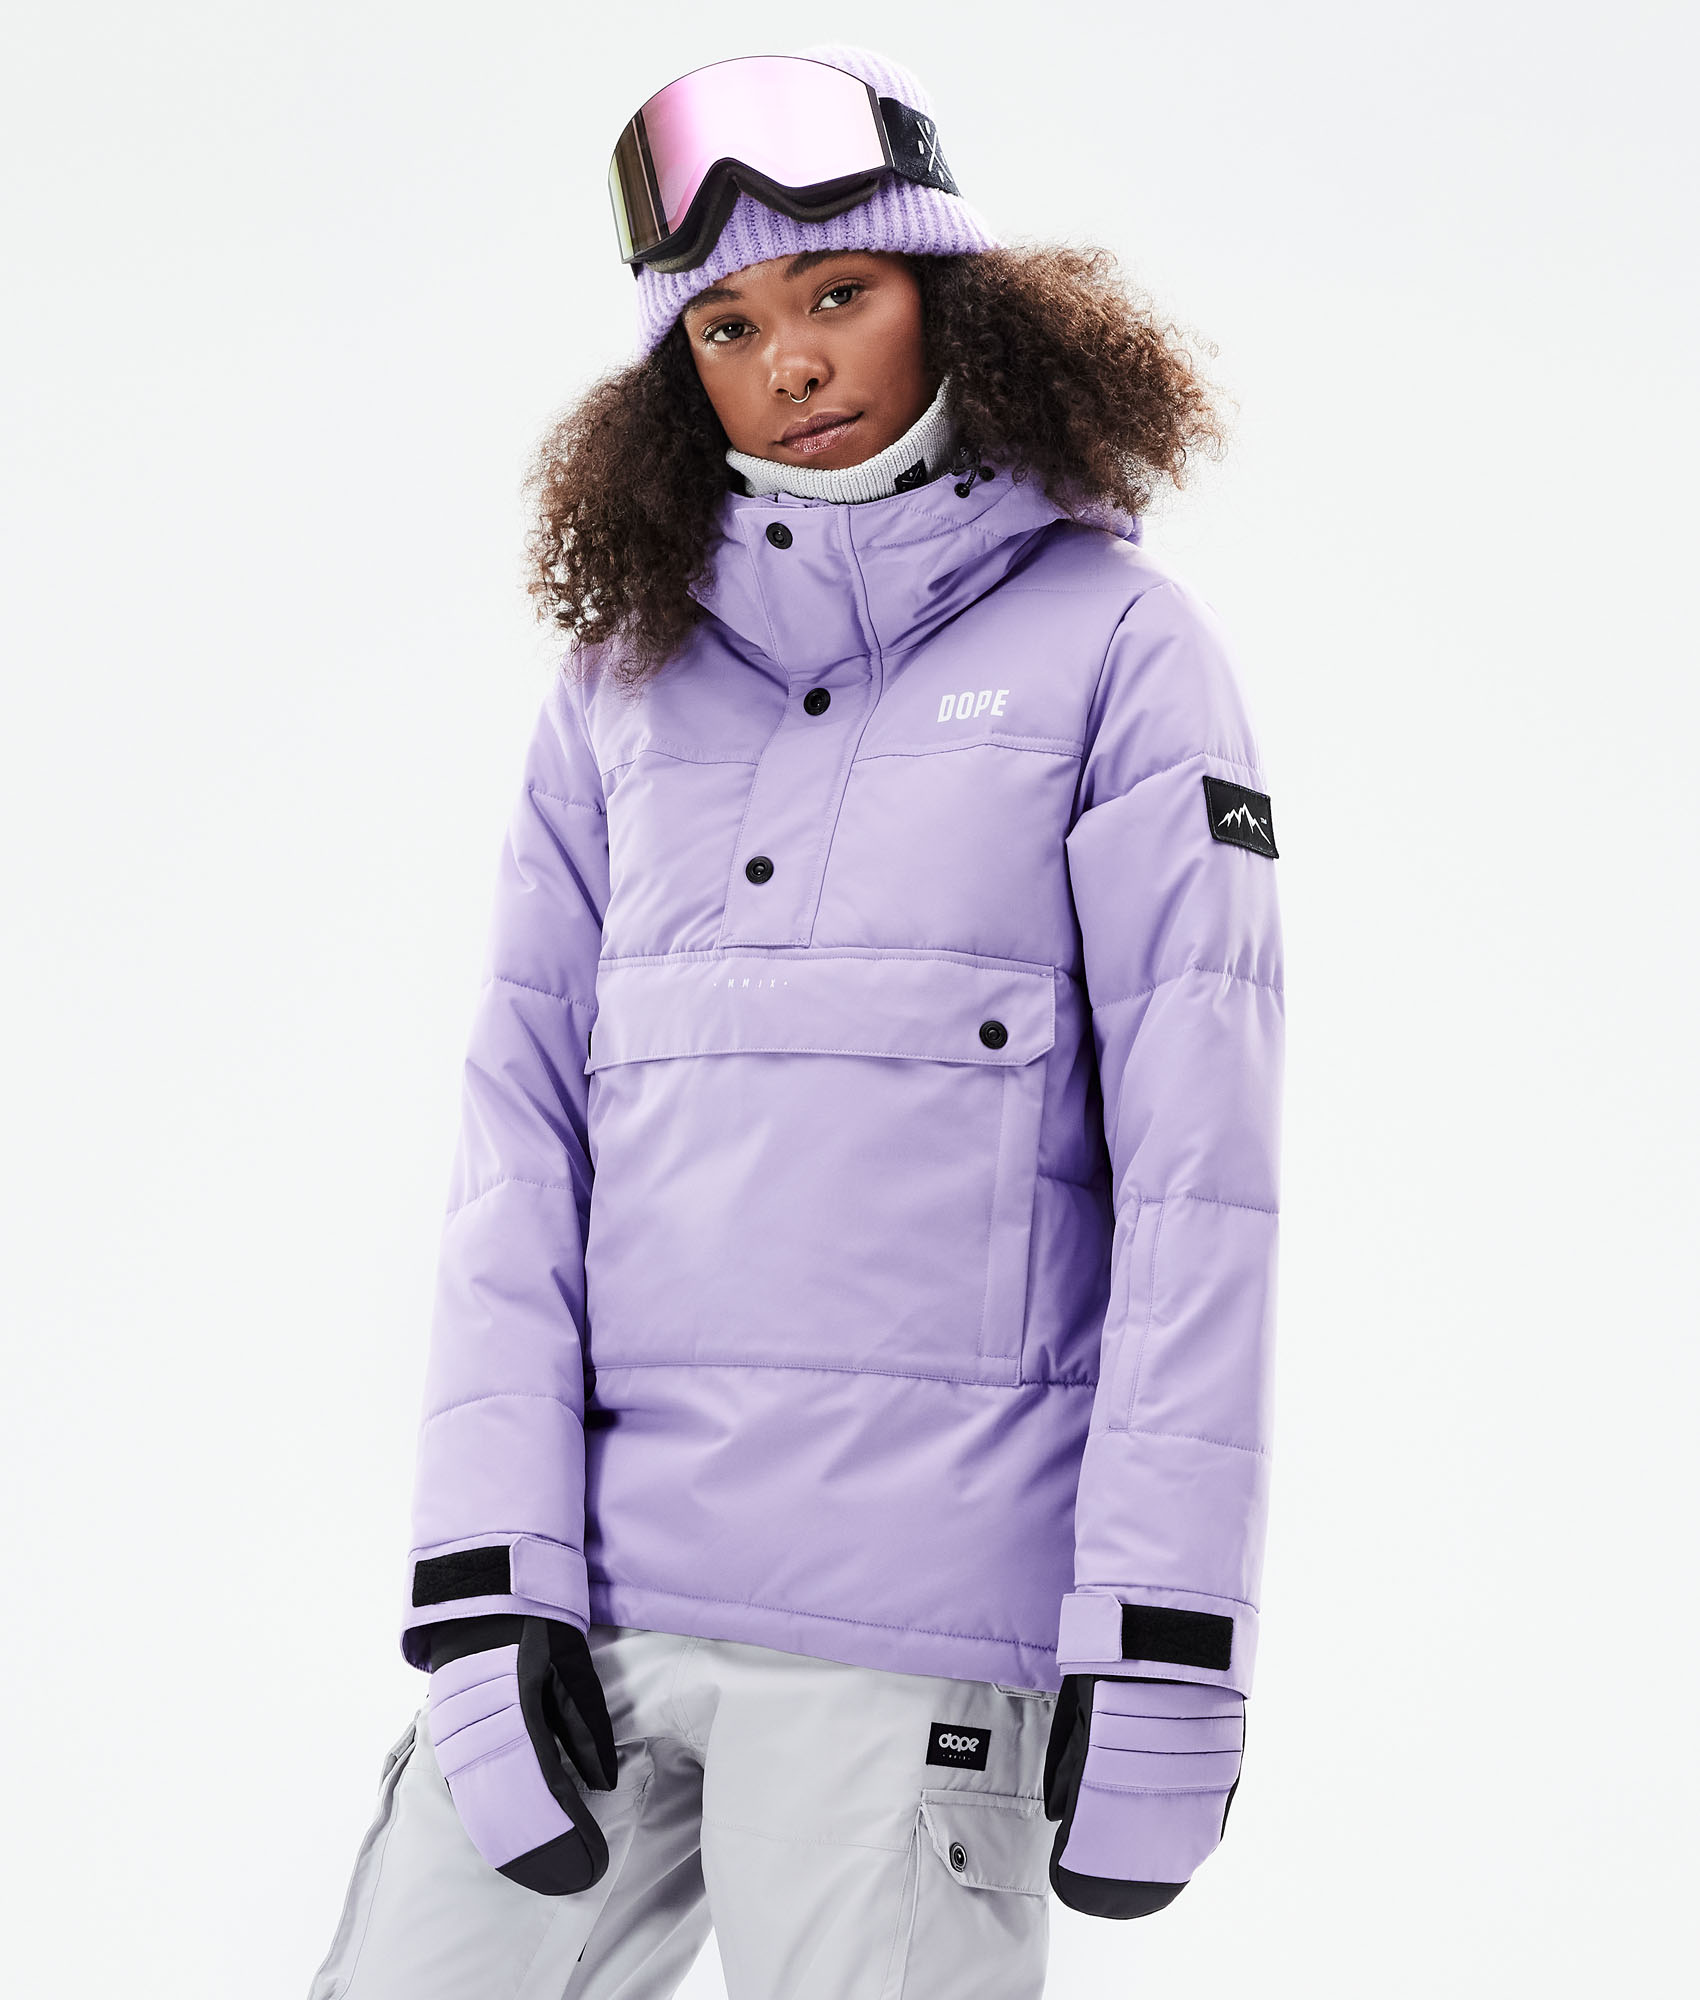 ESPECIAL ROPA ESQUÍ Tsunami 91201 - Chaqueta de esquí mujer white/purple -  Private Sport Shop